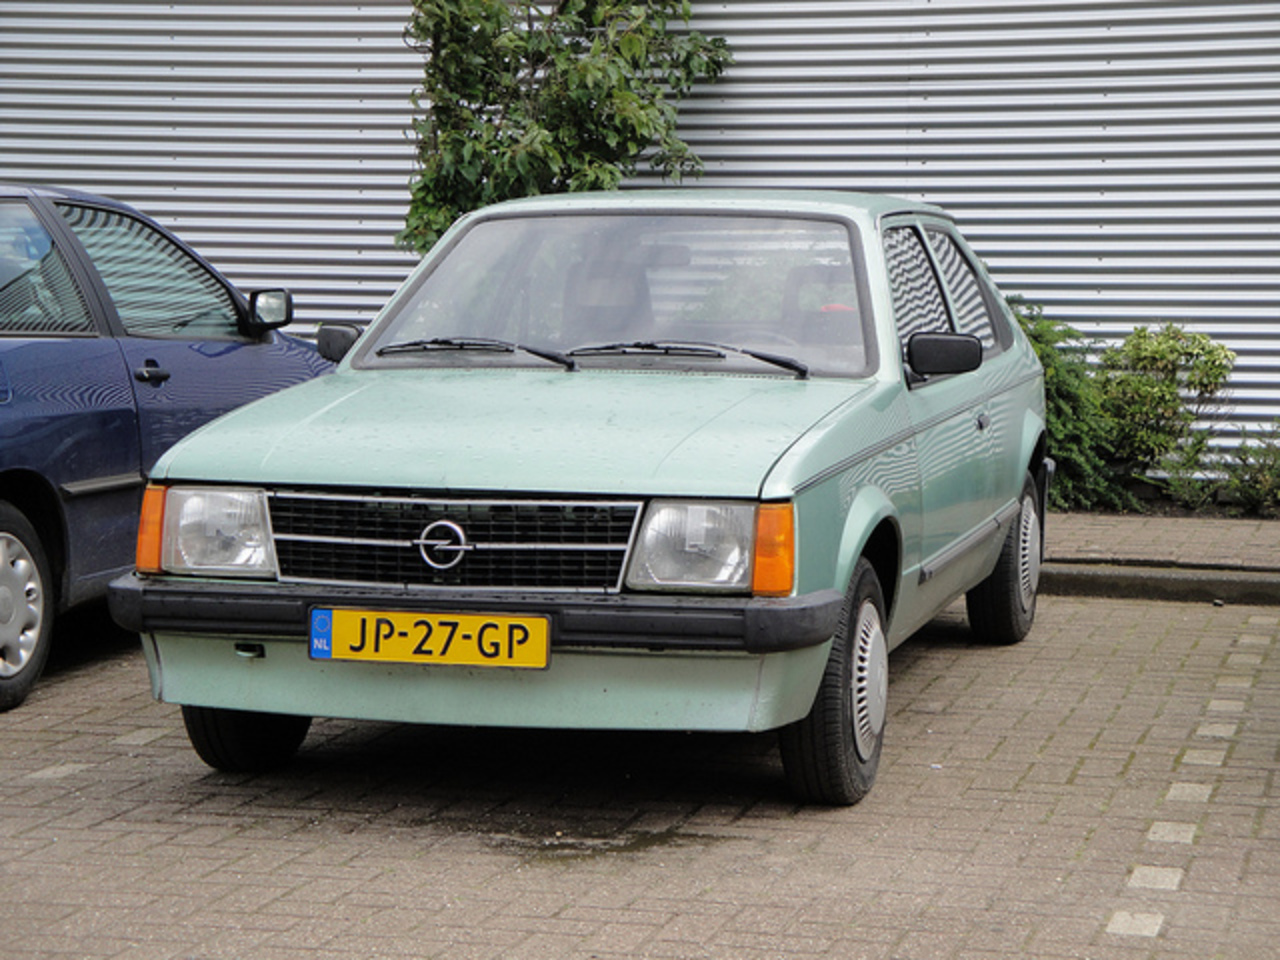 Flickr: The Opel Kadett D - Vauxhall Astra mkI Pool